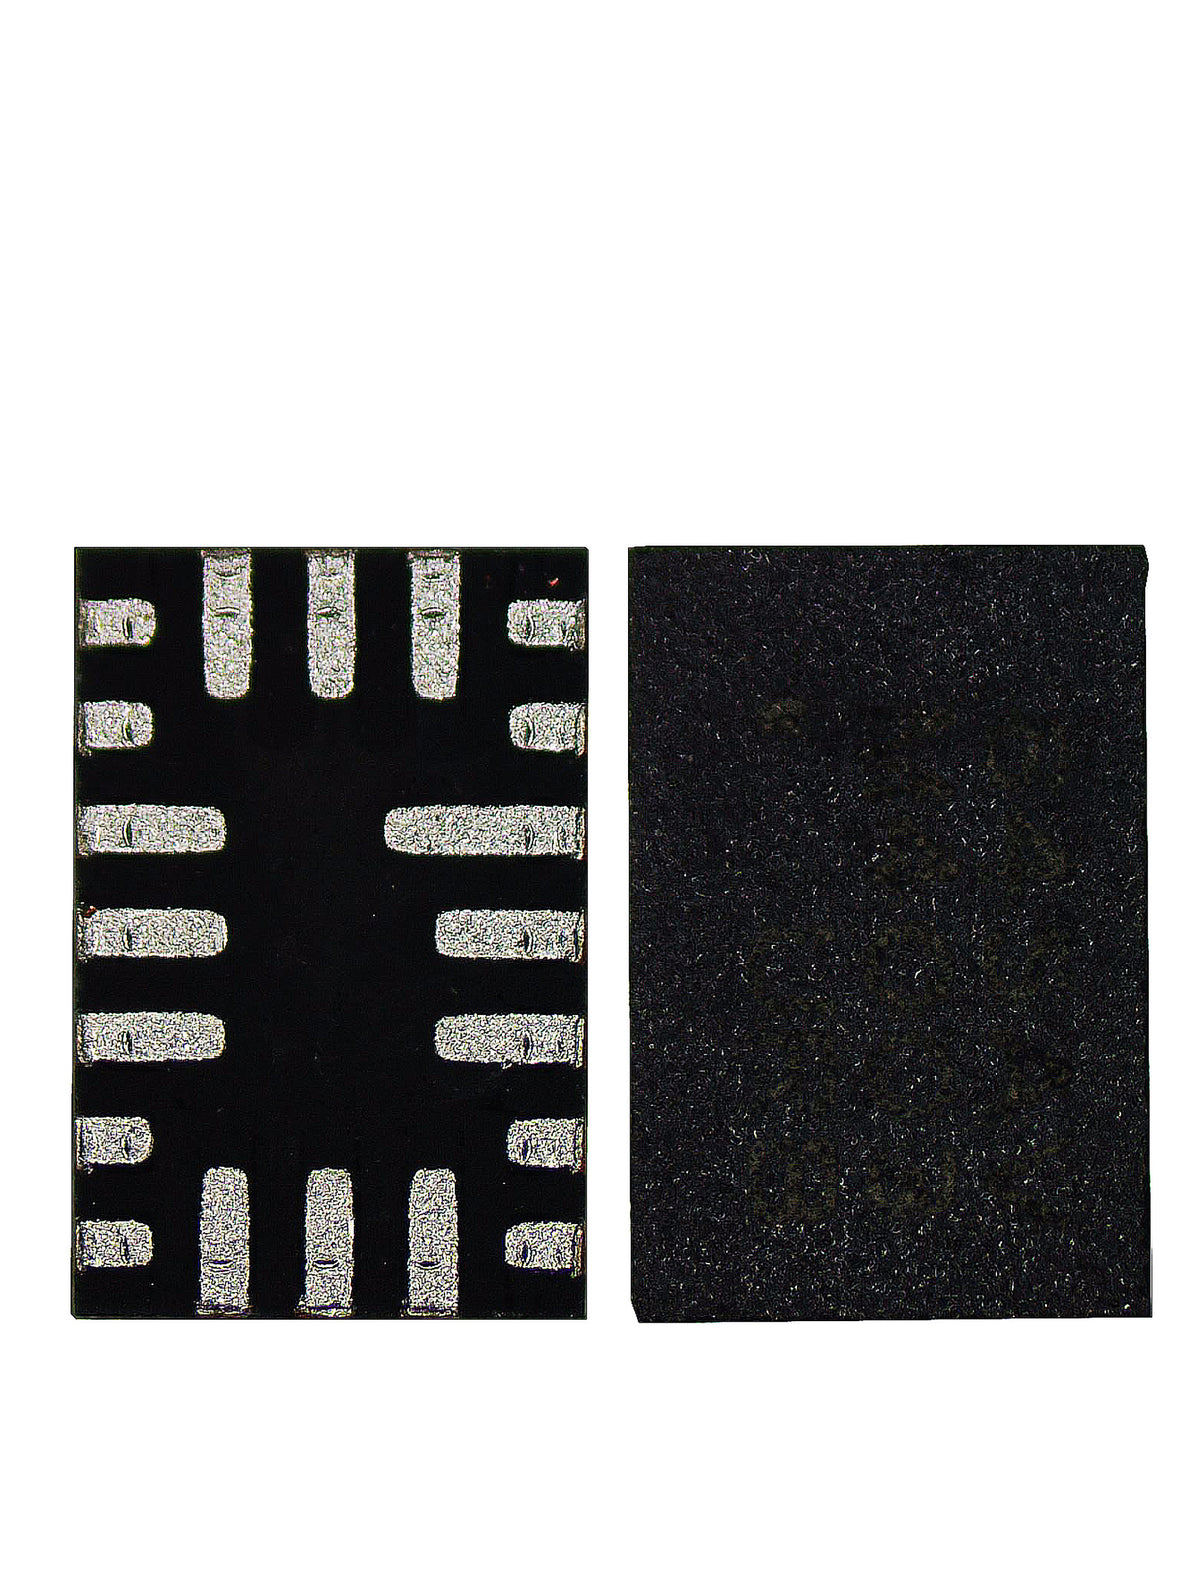 POWER IC / USB-C COMPATIBLE WITH MACBOOK RETINA 12" A1534 (EARLY 2015) (SILEGO: SLG4AP645AV: U4700: QFN-20 PIN)